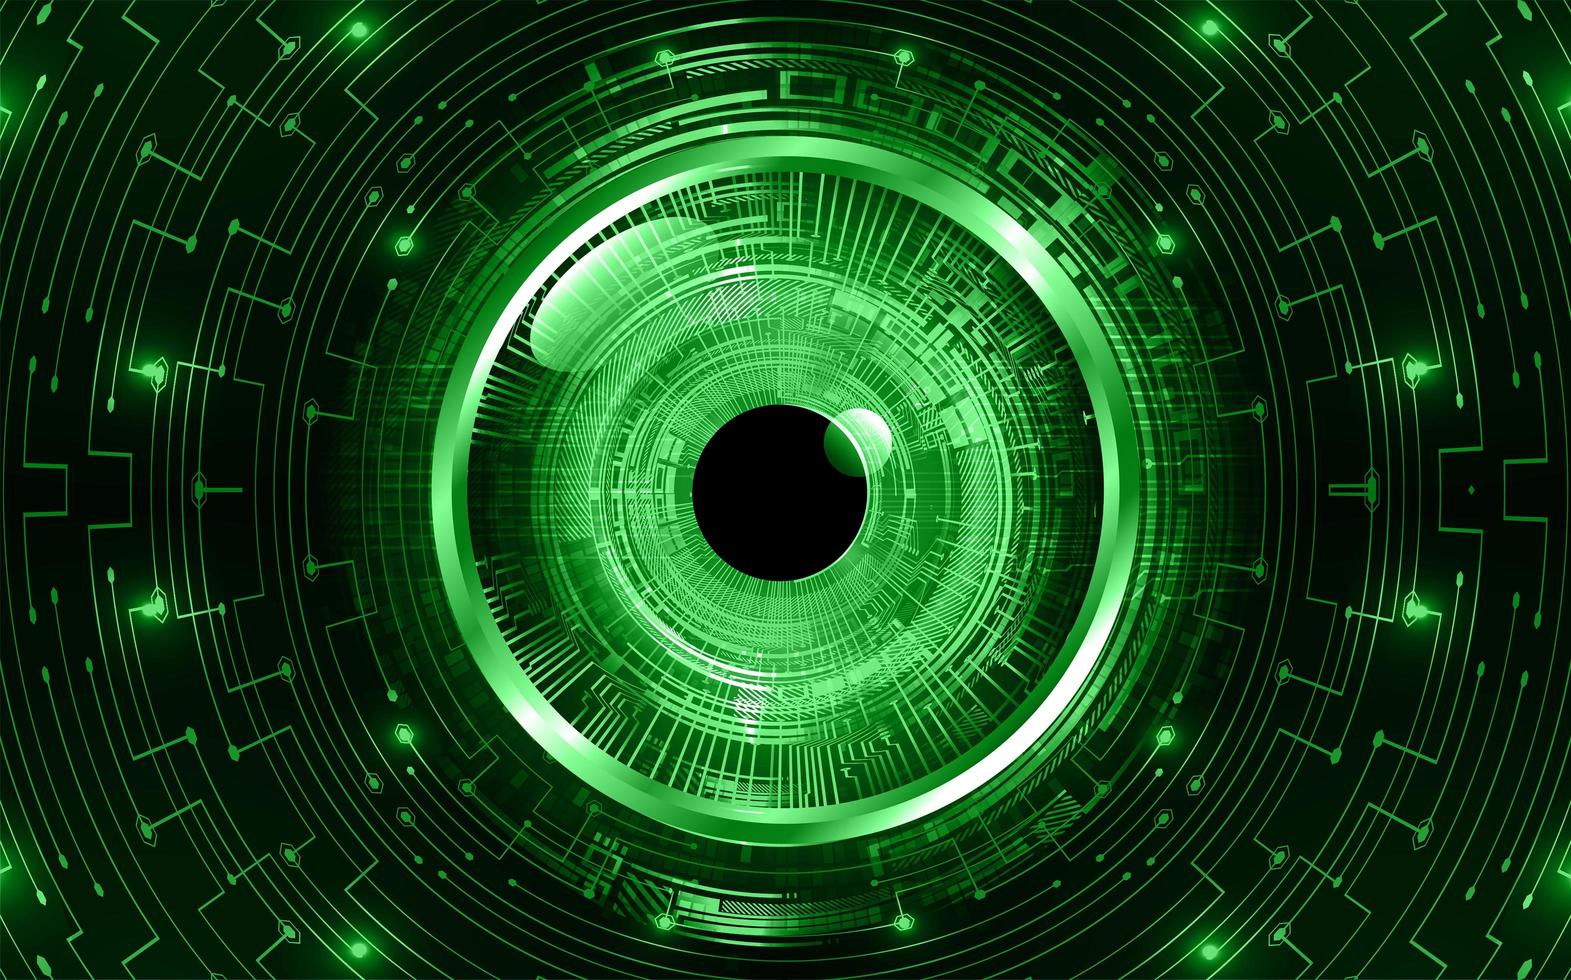 Fondo de concepto de tecnología futura de circuito cibernético de ojo verde vector